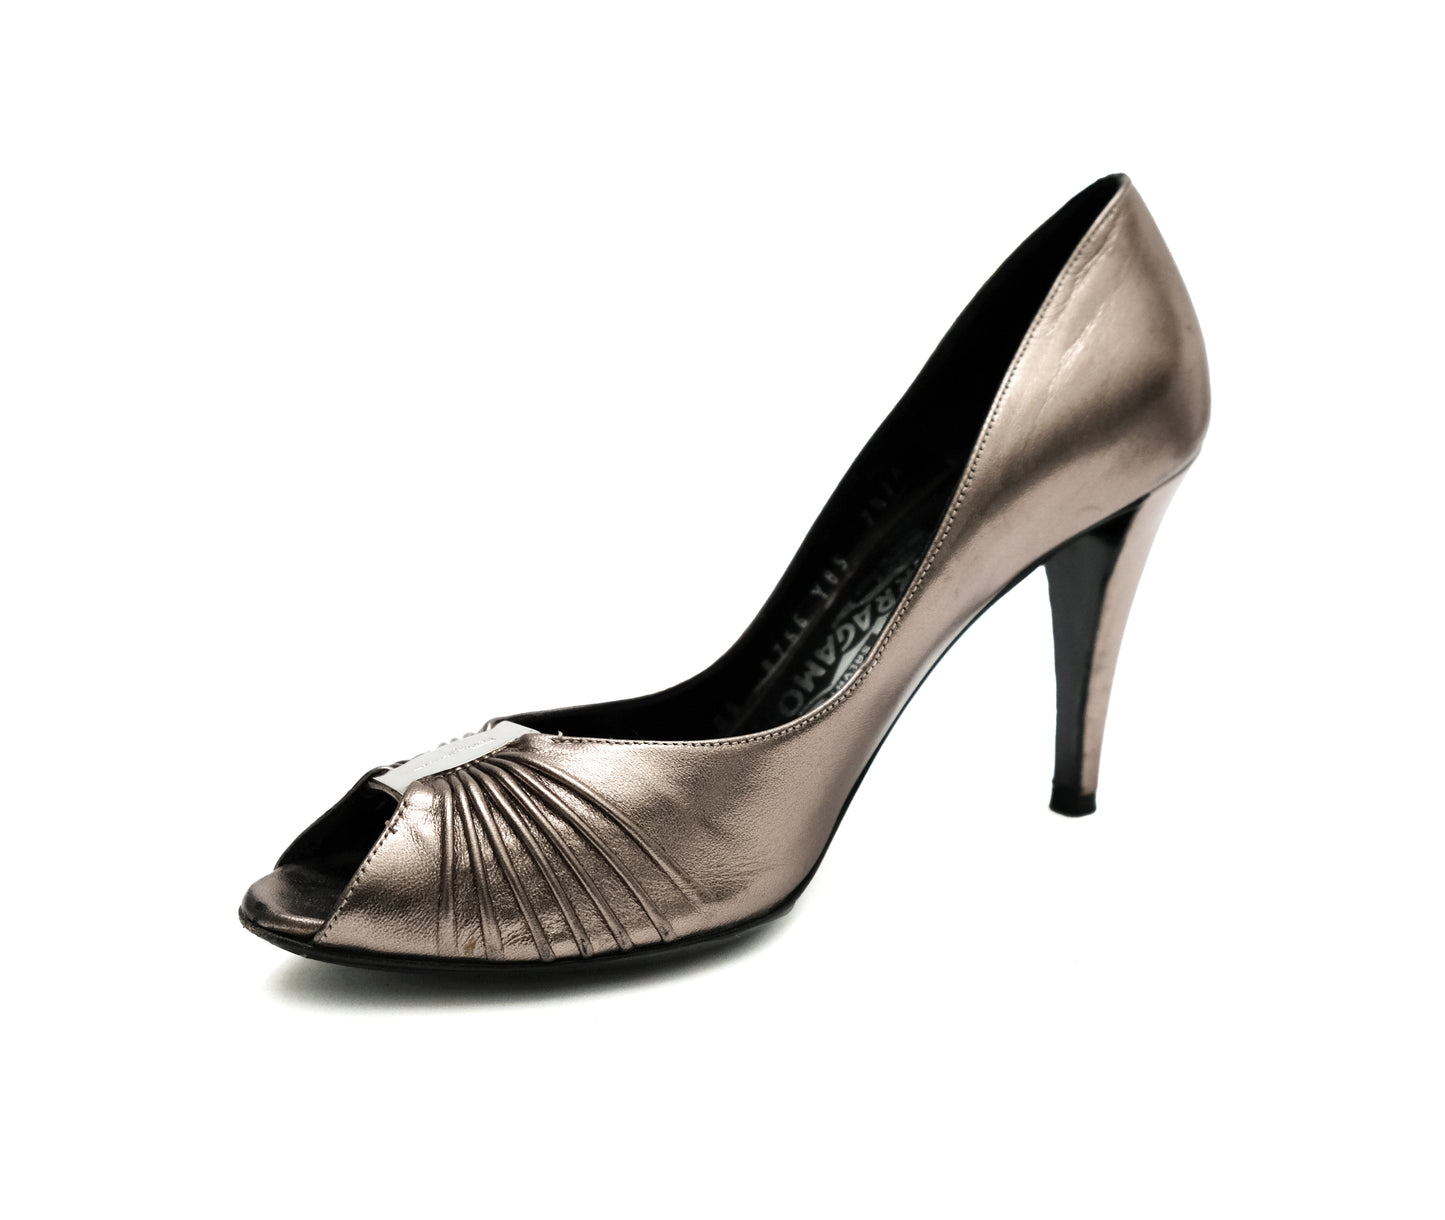 Salvatore Ferragamo Peep Toe Shoes in Silver Leather, UK5.5